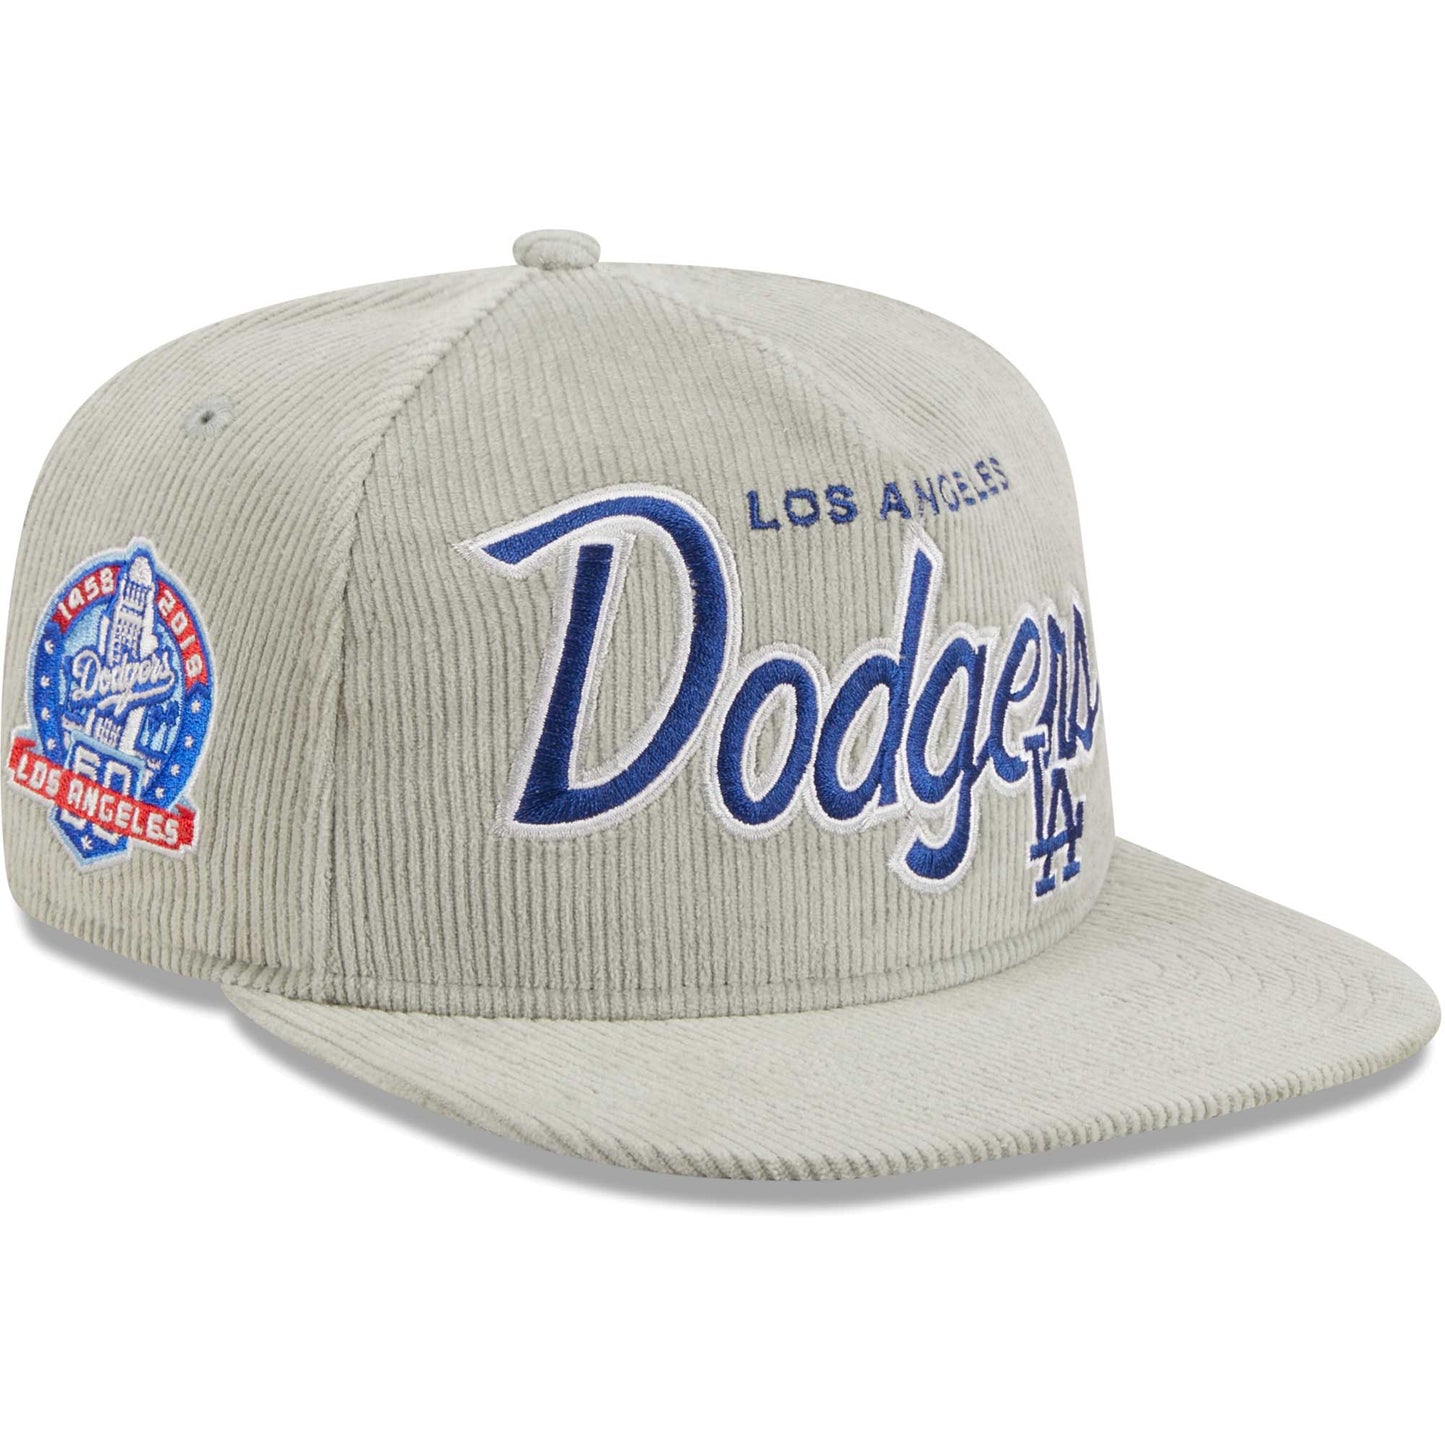 Los Angeles Dodgers New Era Corduroy Golfer Adjustable Hat - Gray